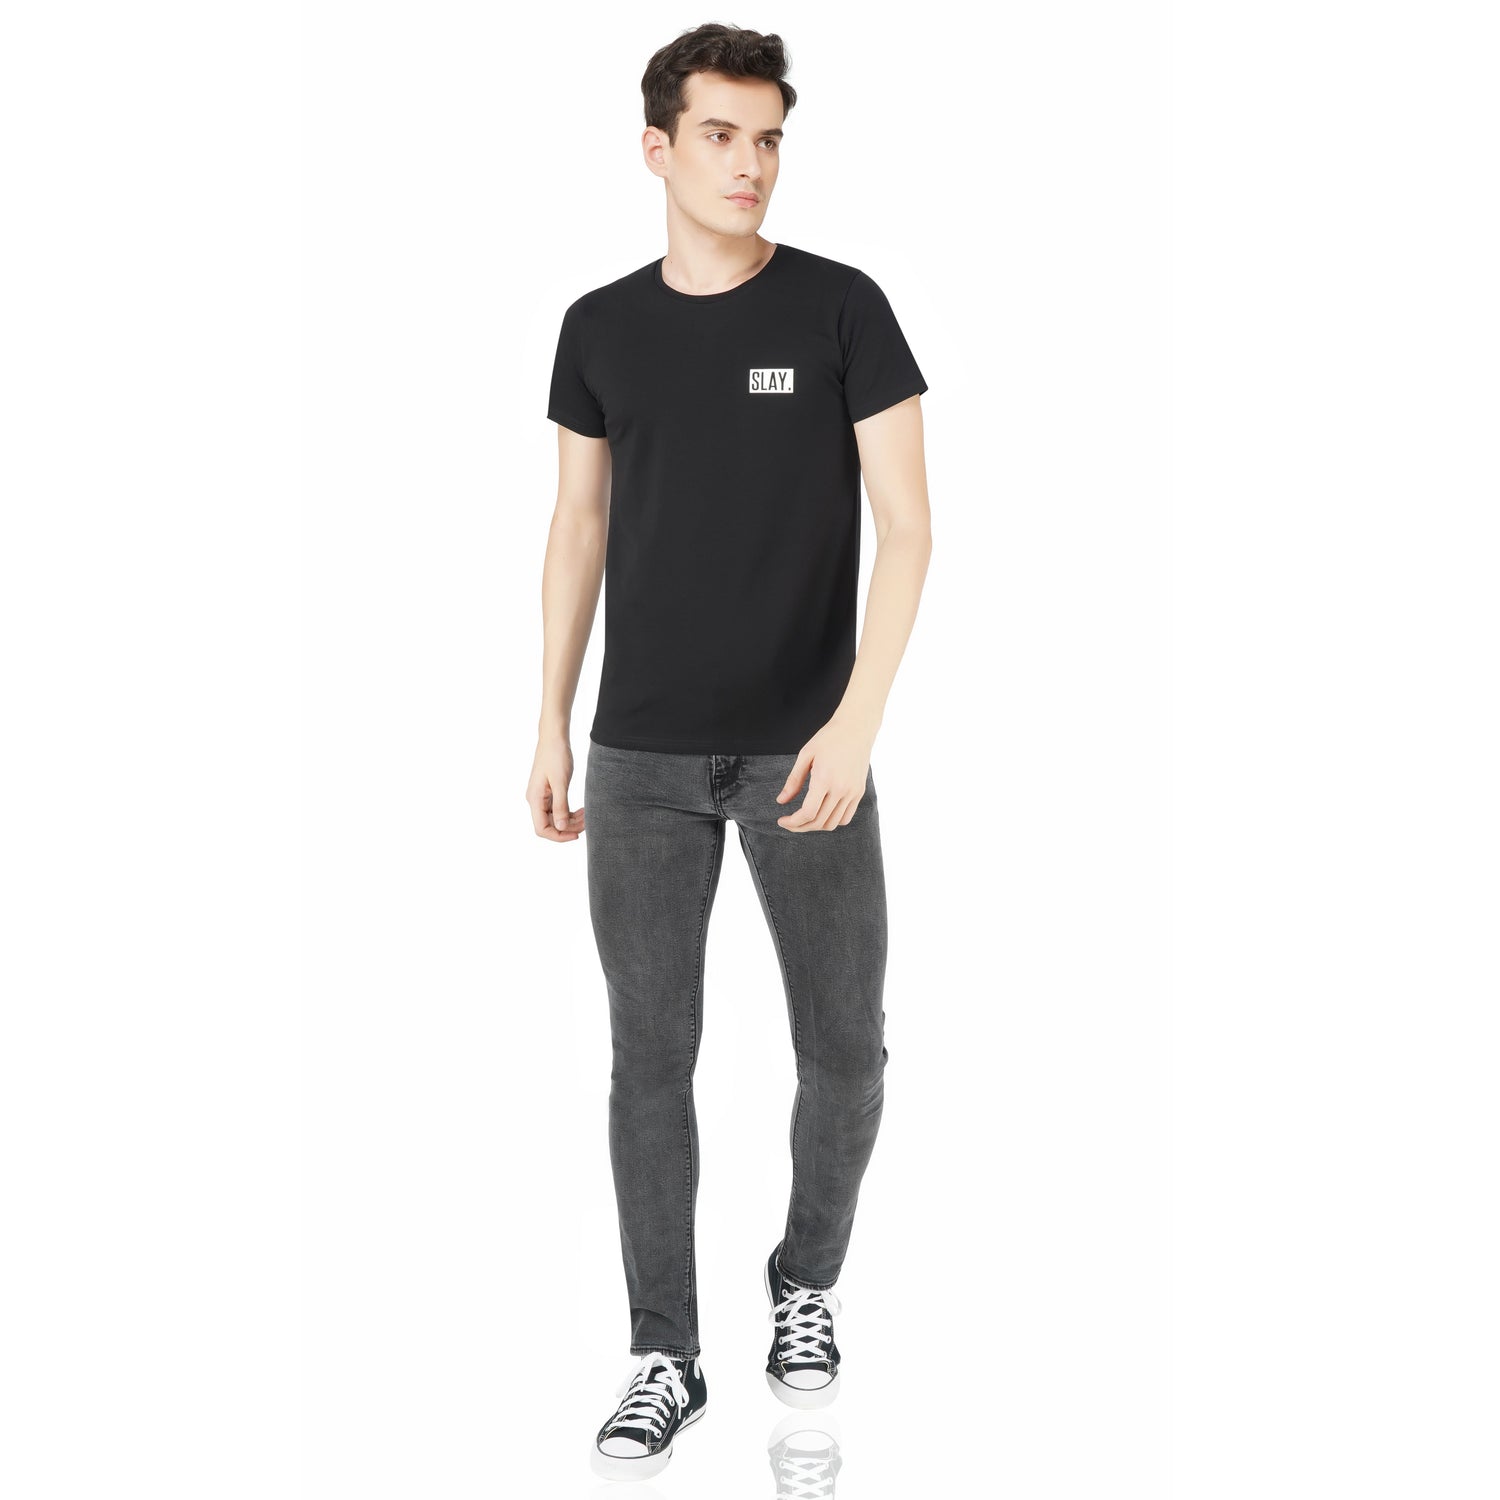 SLAY. Men's Basic Plain Black T shirt-clothing-to-slay.myshopify.com-T-Shirt